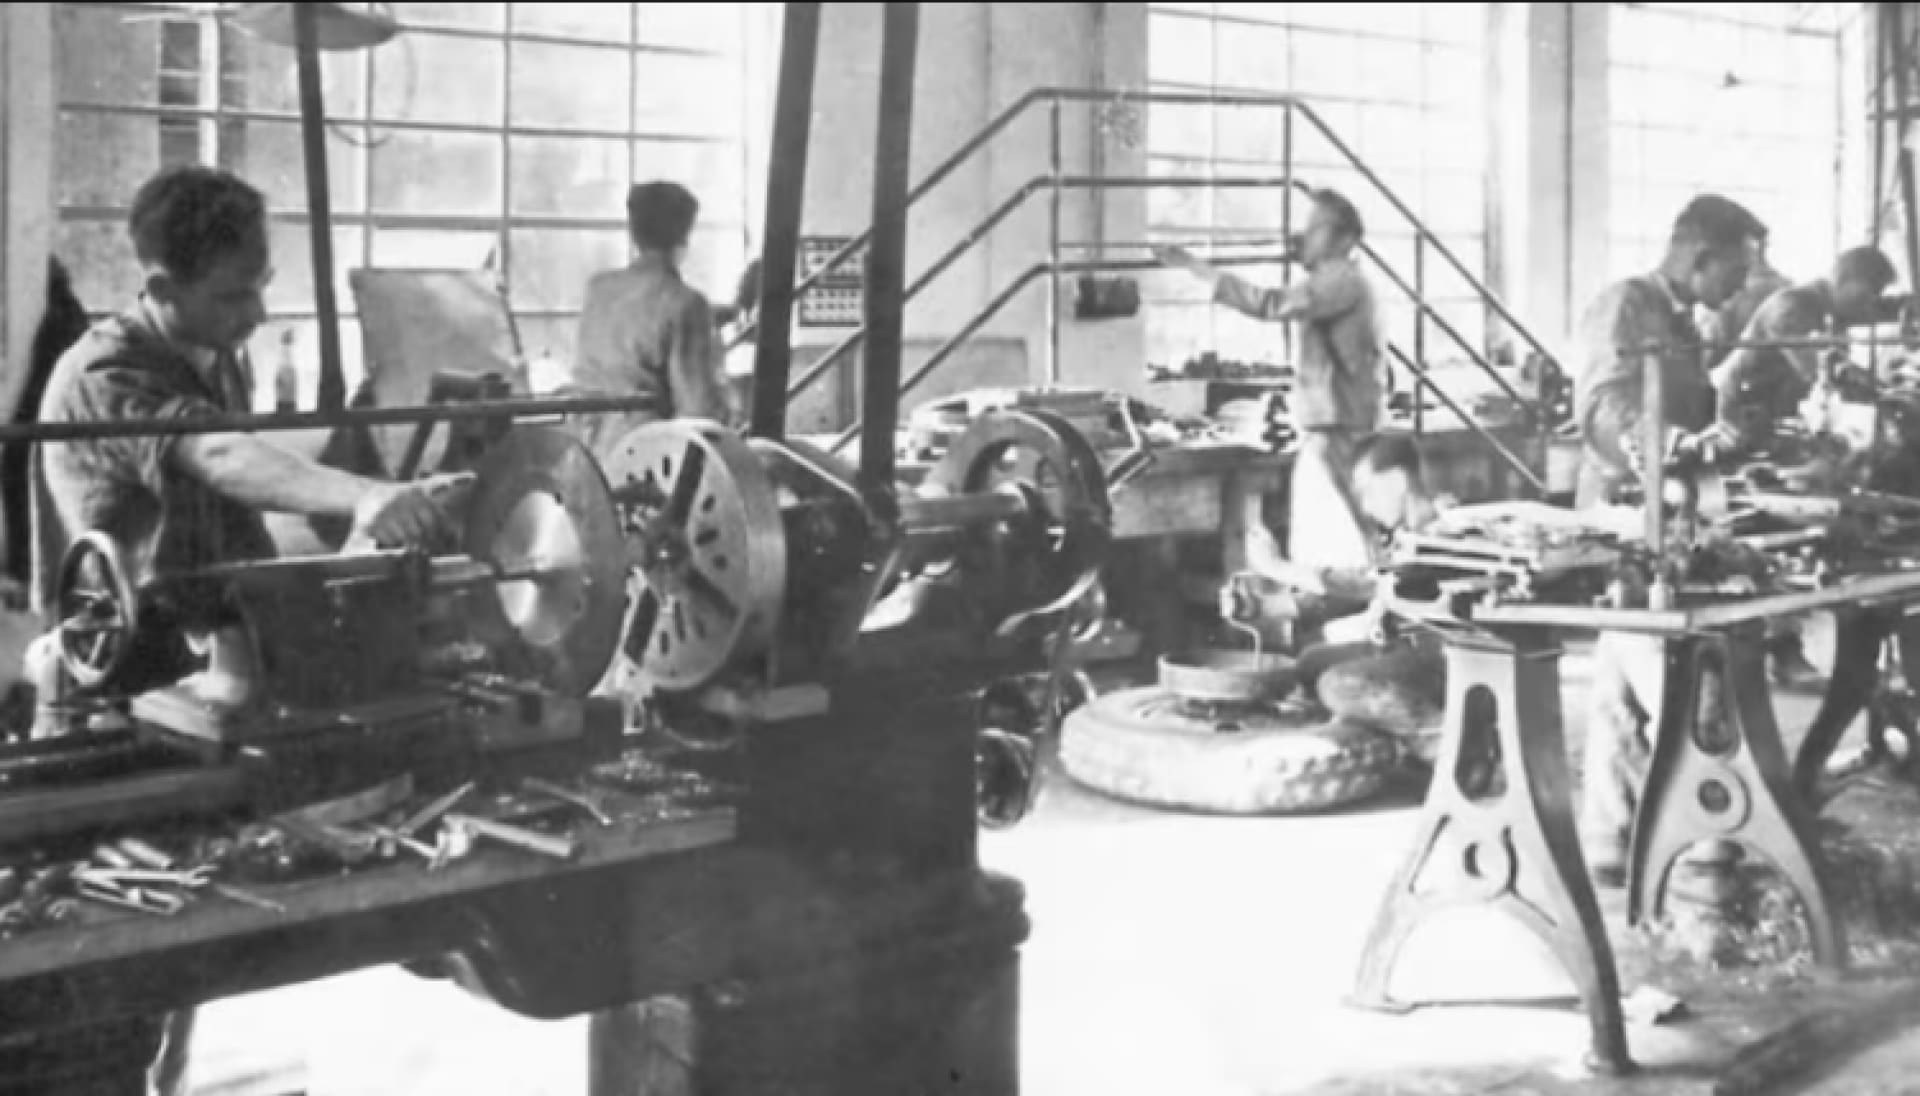 Archive usine Hilti 